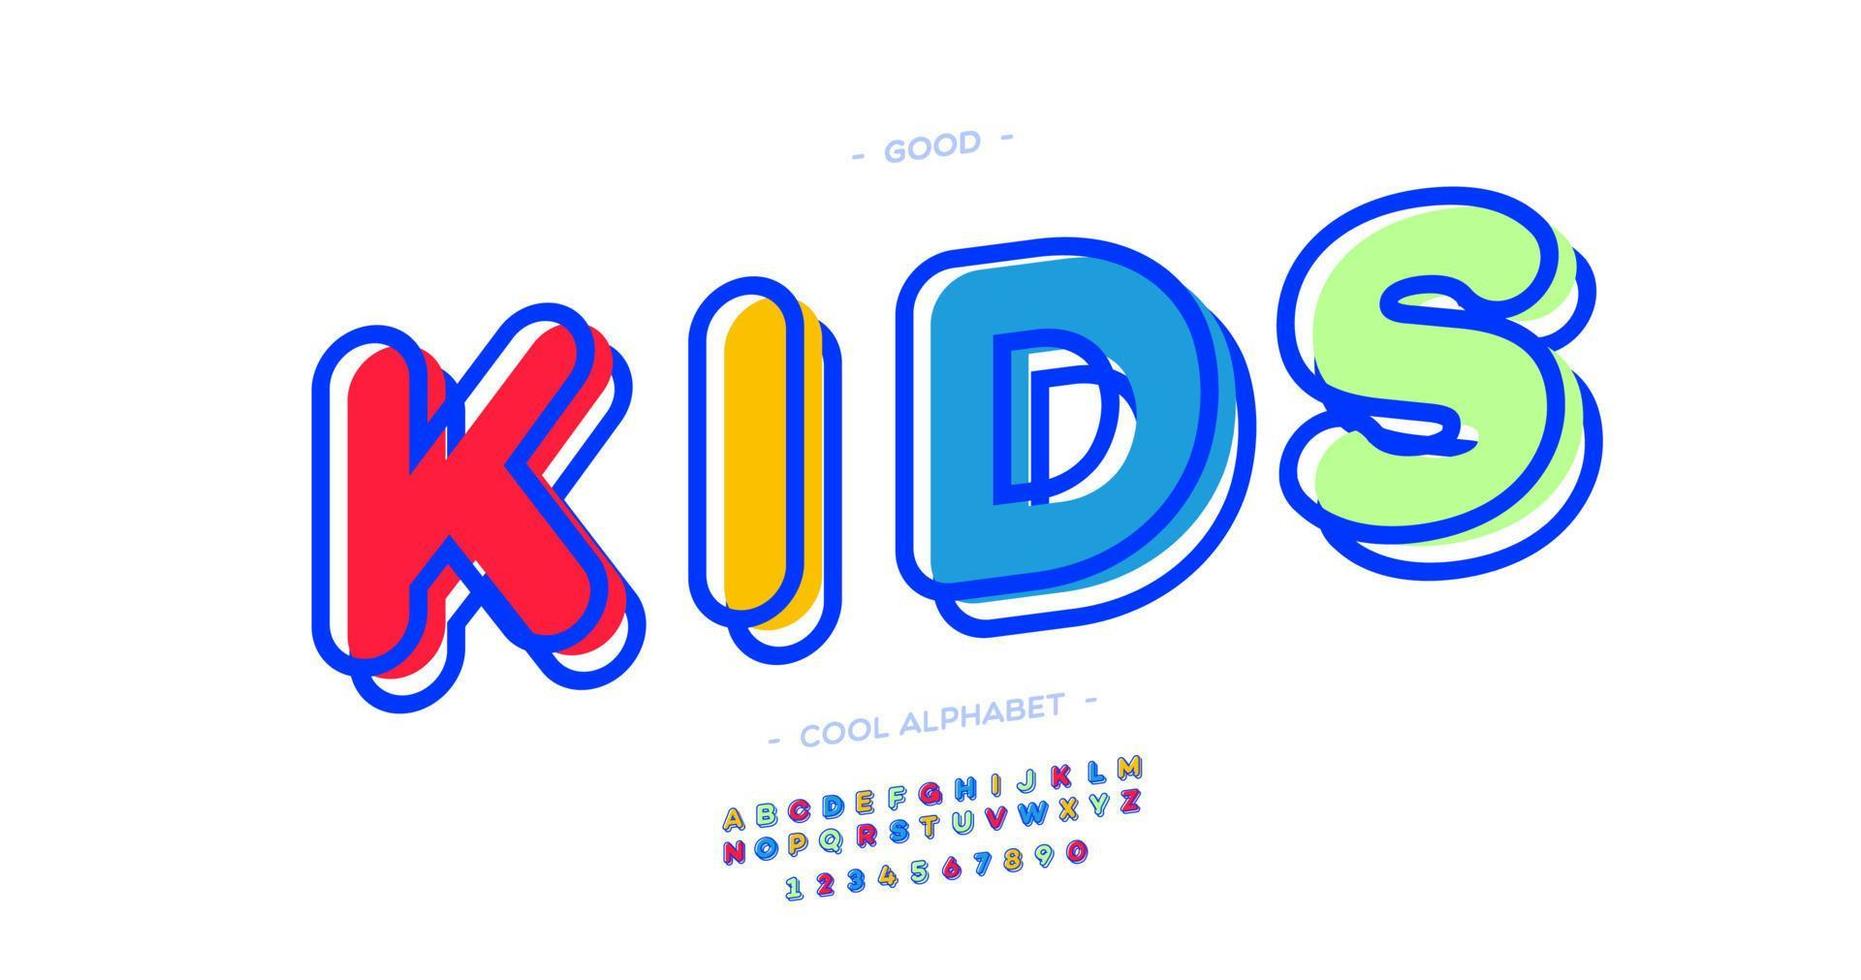 fonte de vetor infantil 3d estilo colorido em negrito